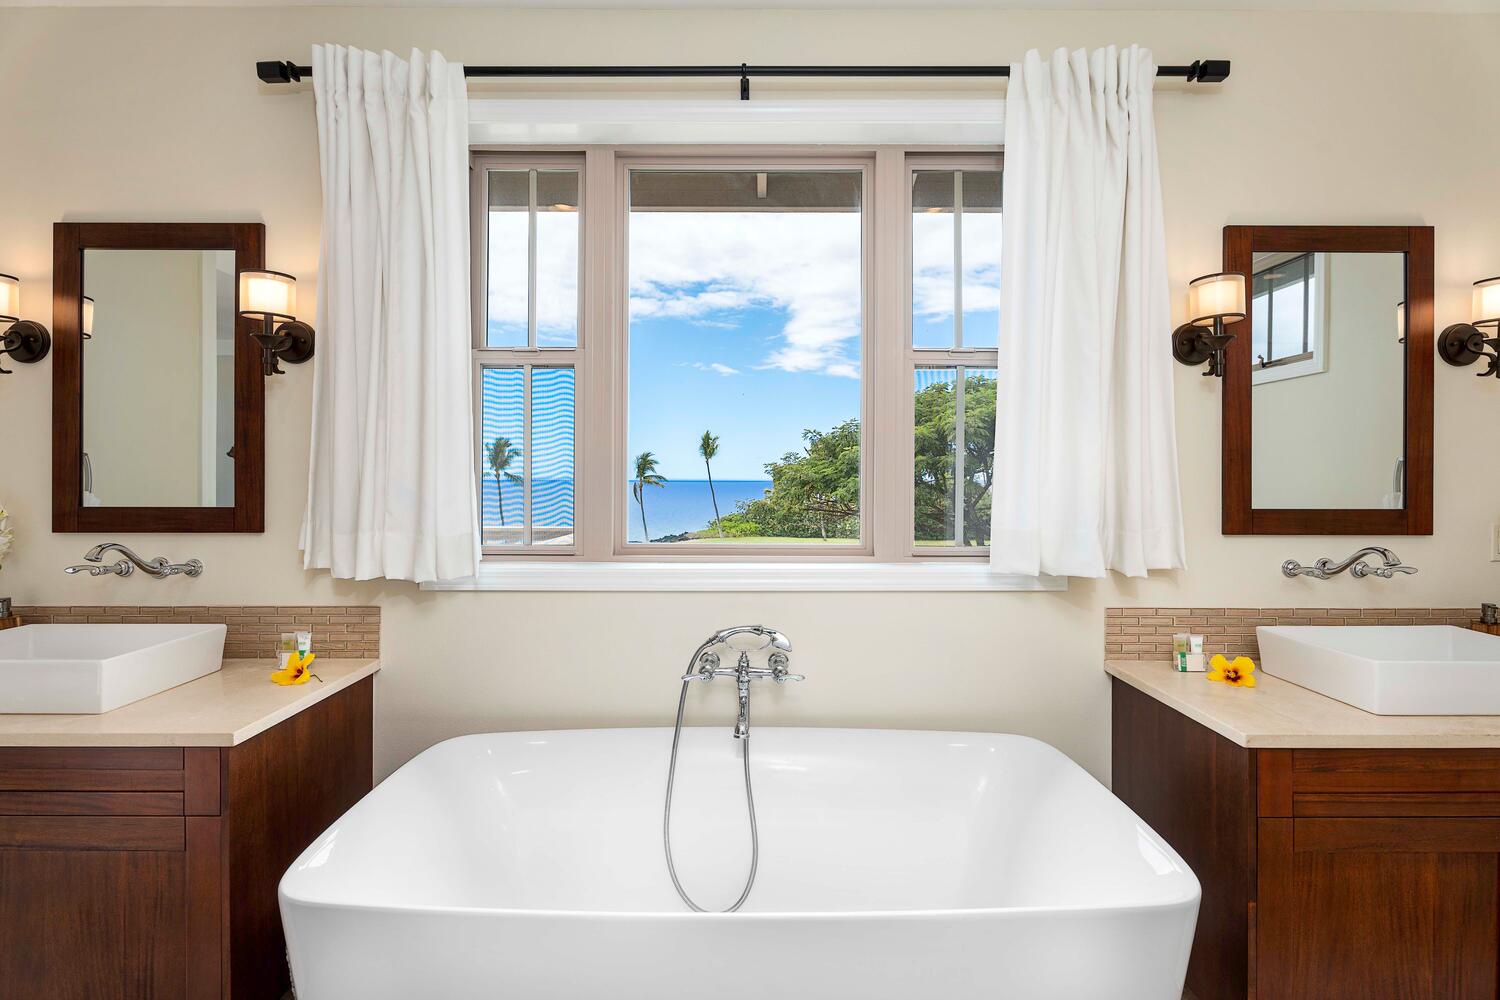 Kailua-Kona Vacation Rentals, Holua Kai #26 - Luxurious bath with an ocean view, perfect for serene relaxation.